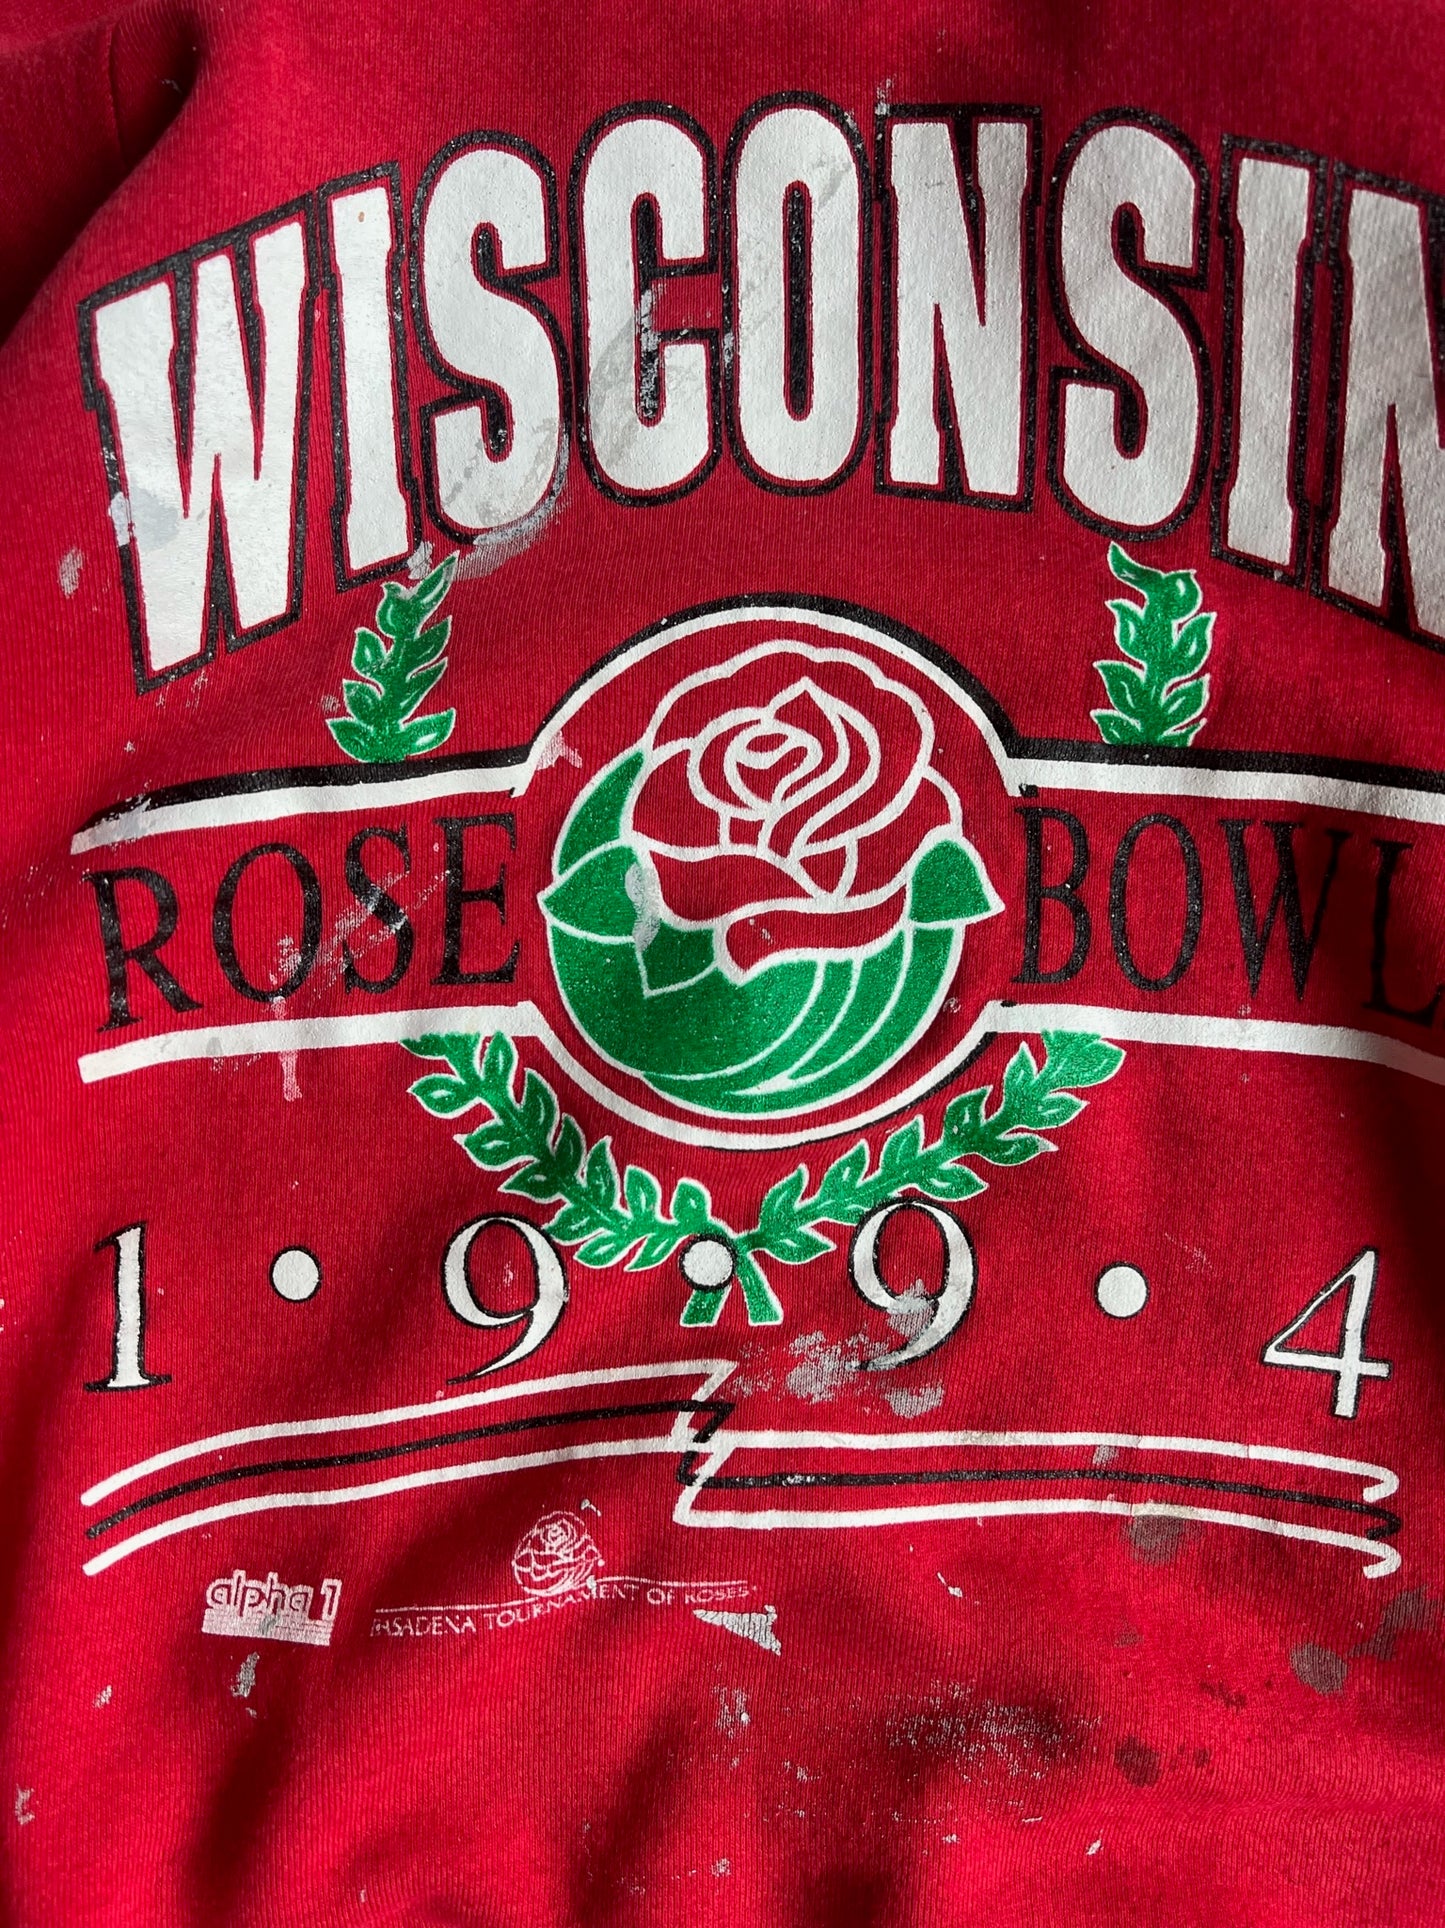 Vintage Wisconsin Rose Bowl Crew - XL